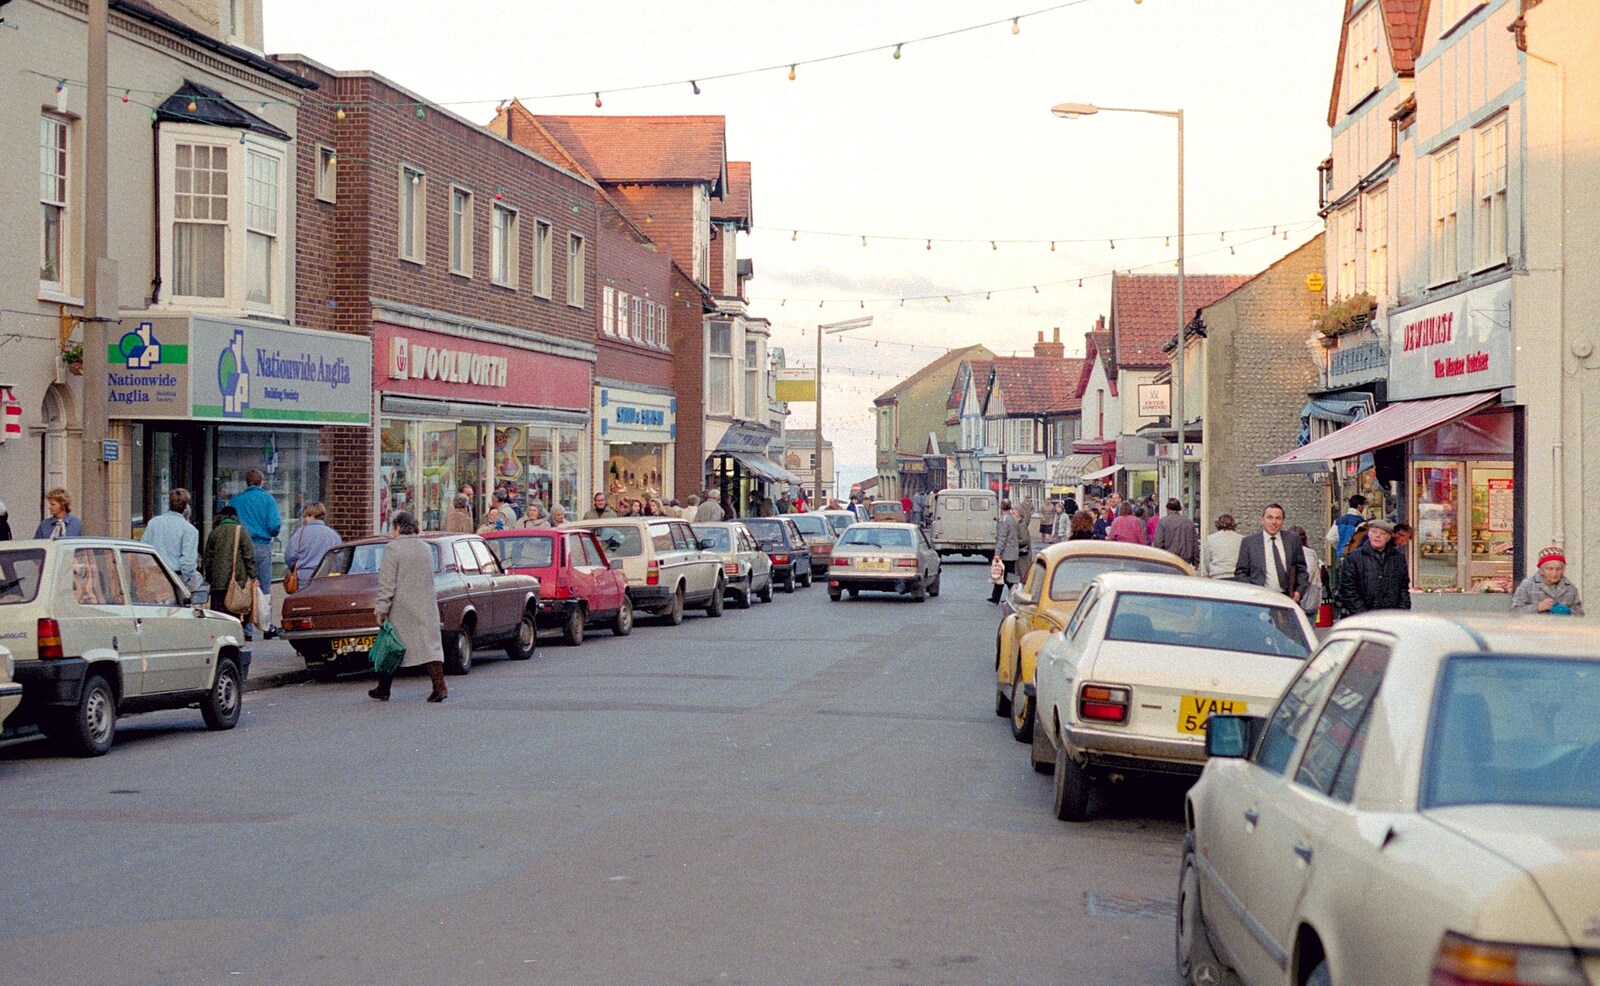 Sheringham High Street from A Visit to Sheringham, North Norfolk - 20th November 1987